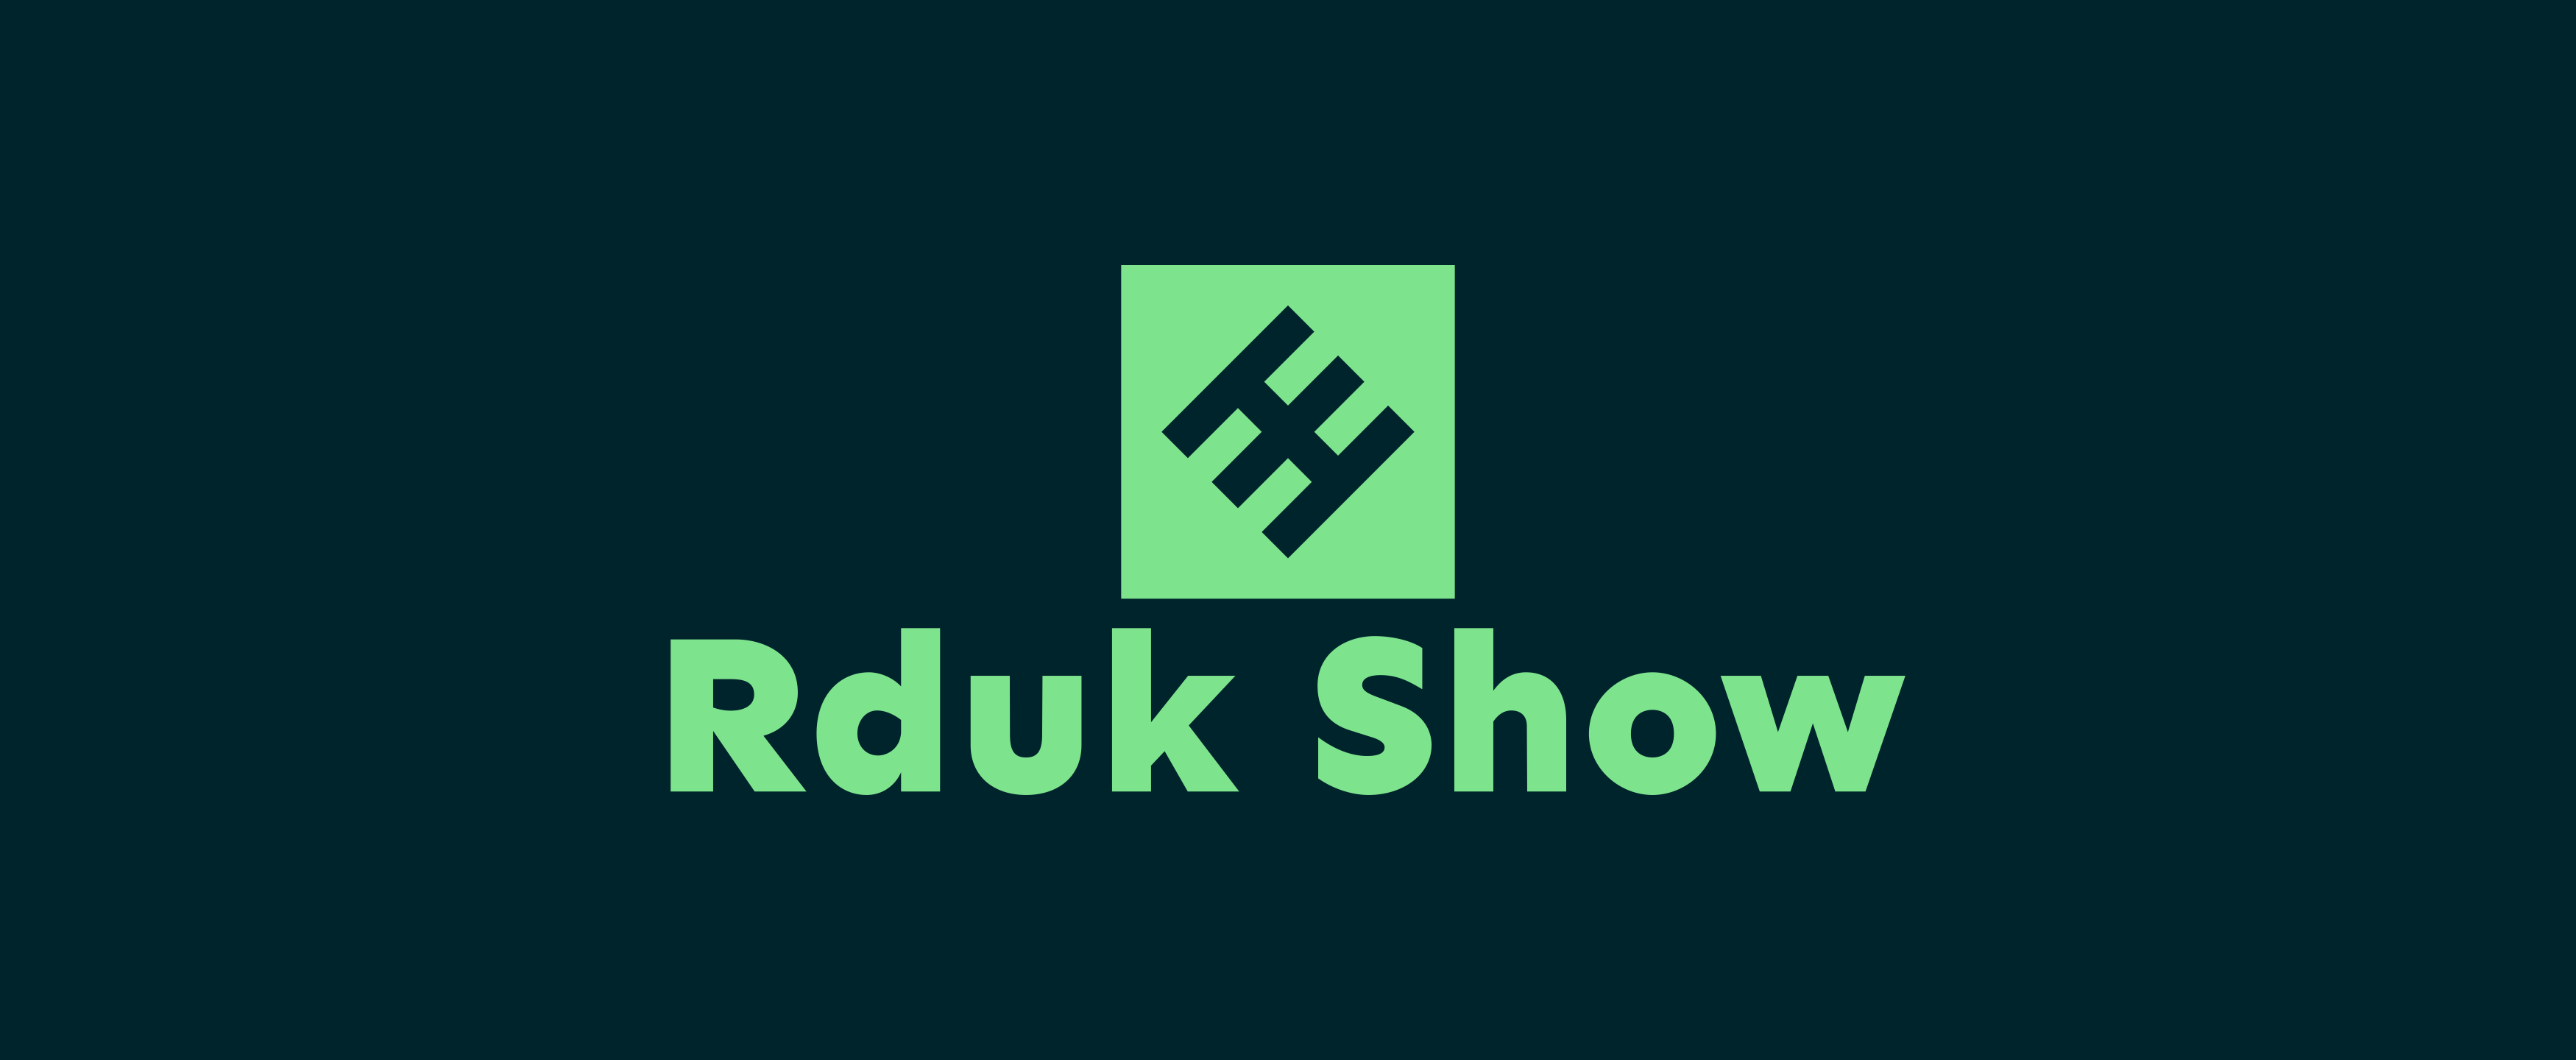 Rduk Show